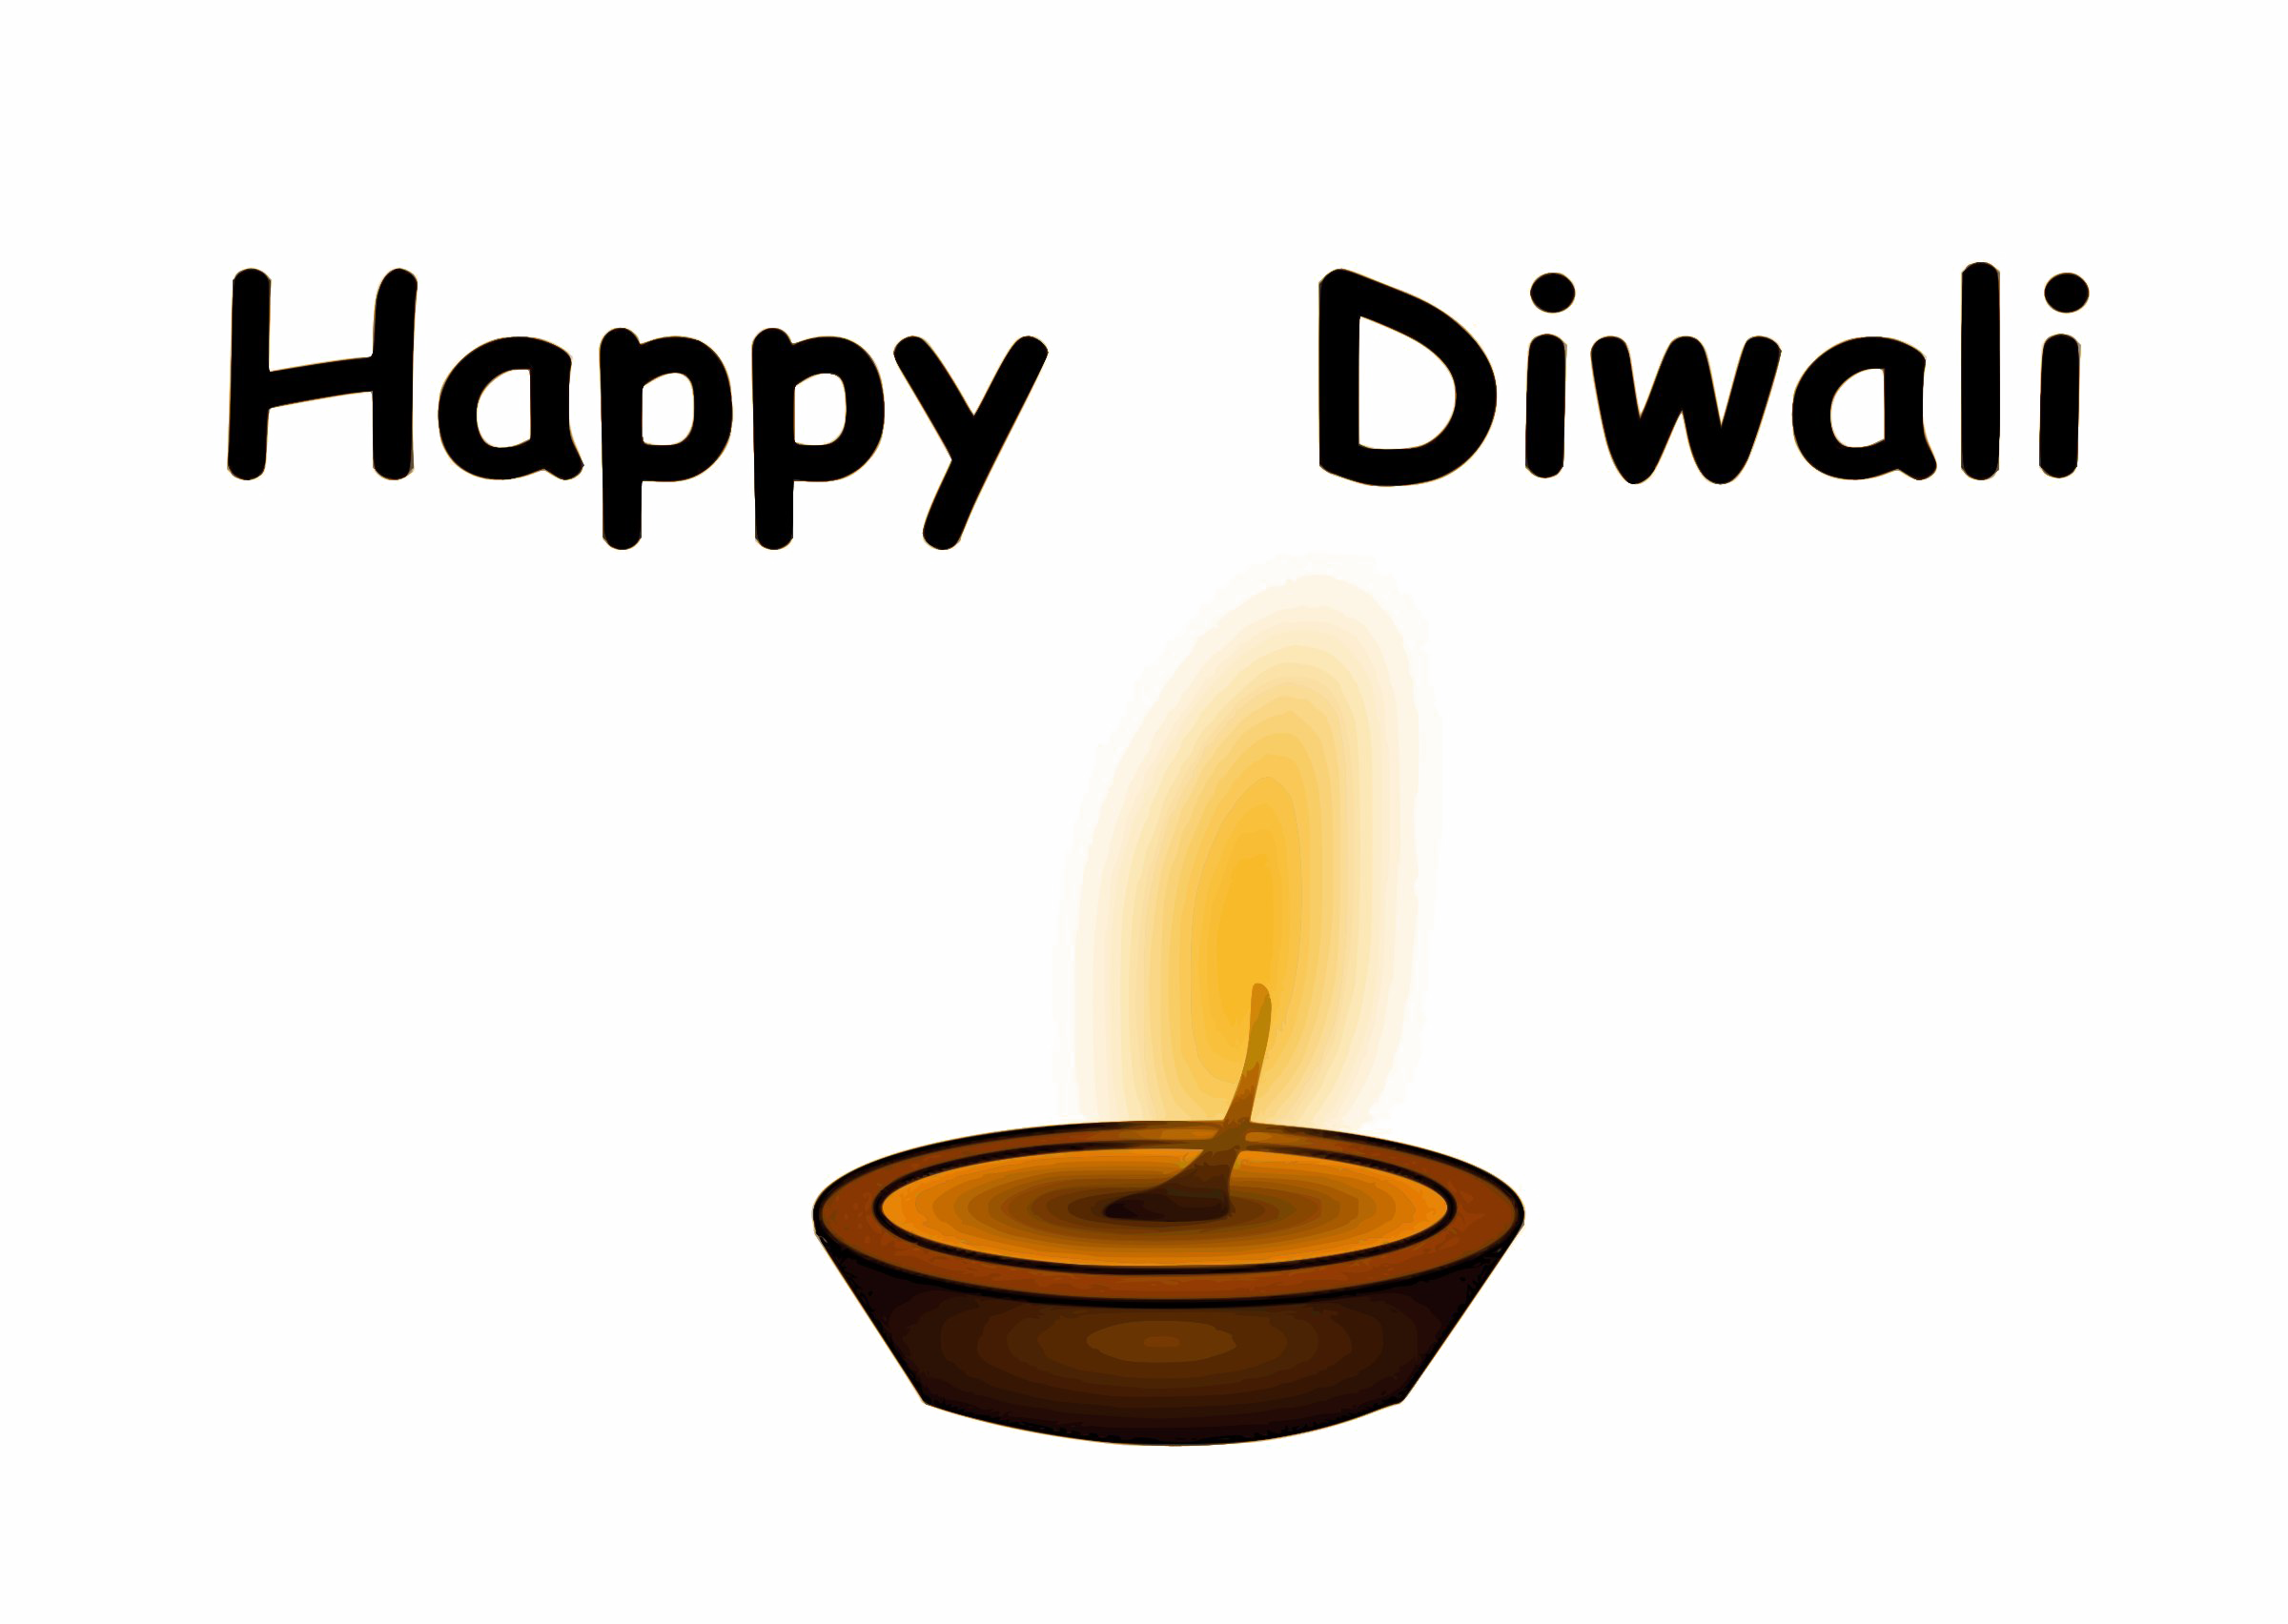 Happy Diwali PNG Transparent Images - PNG All